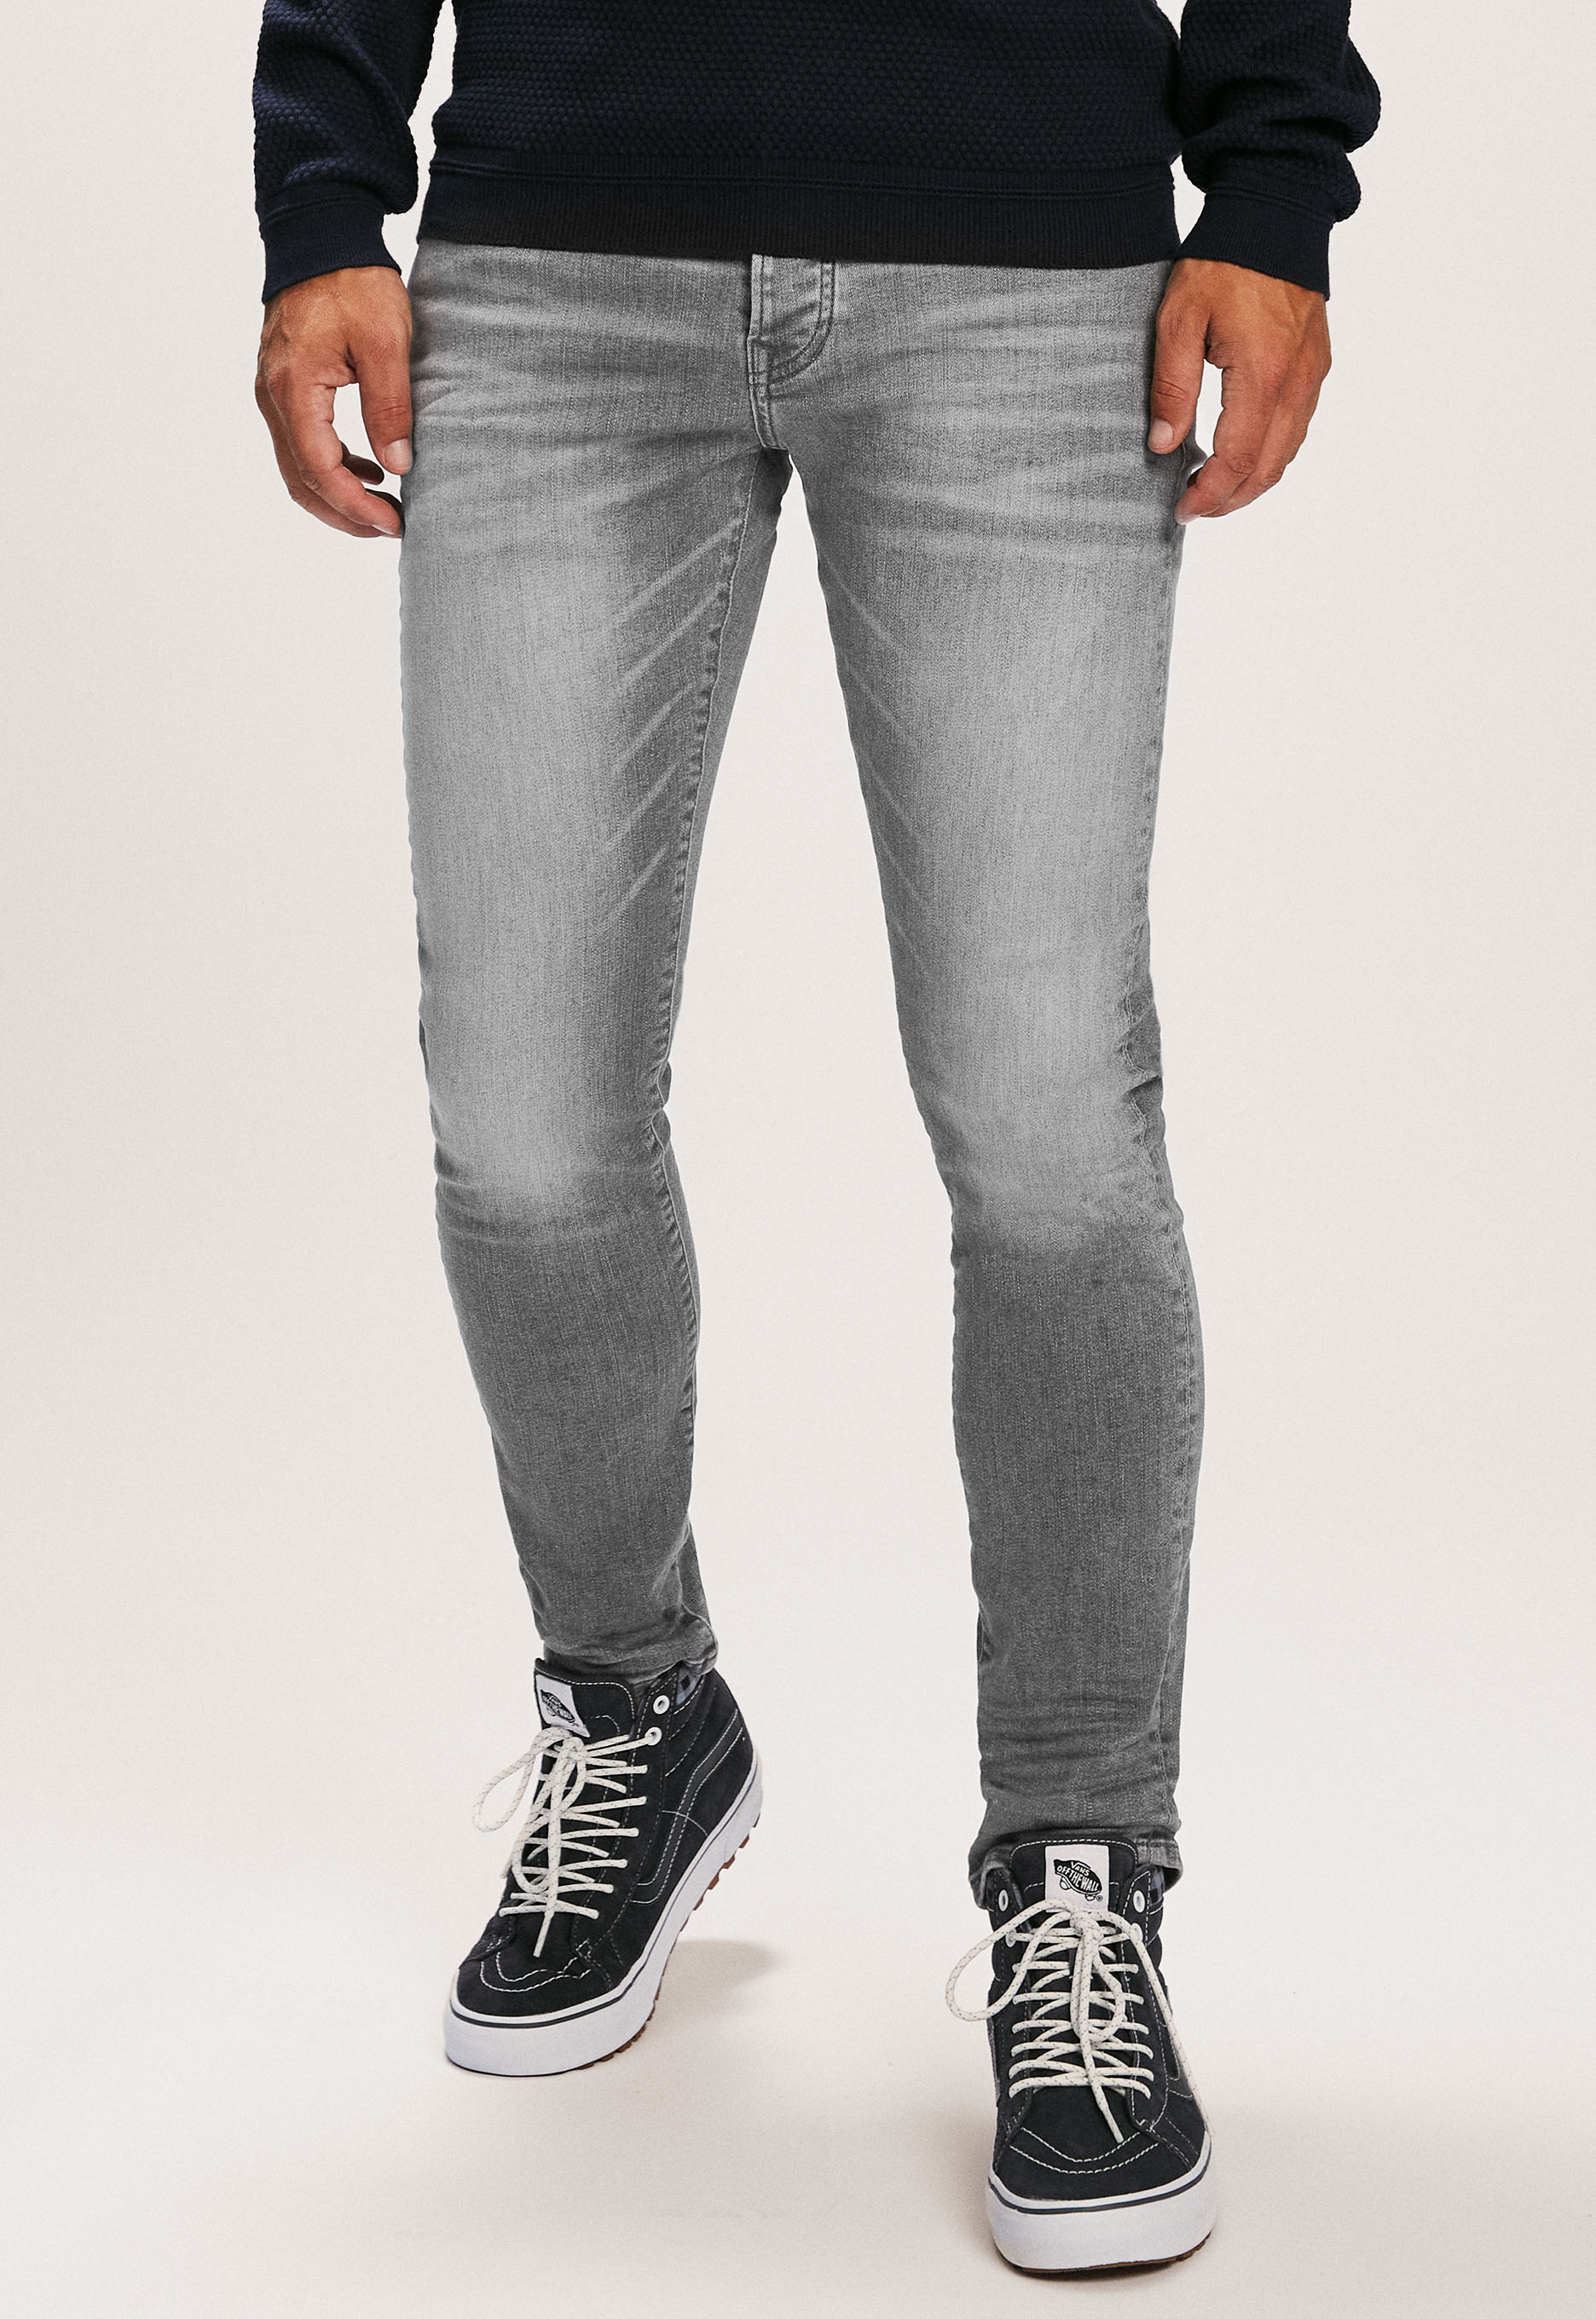 Silvercreek Porter jeans